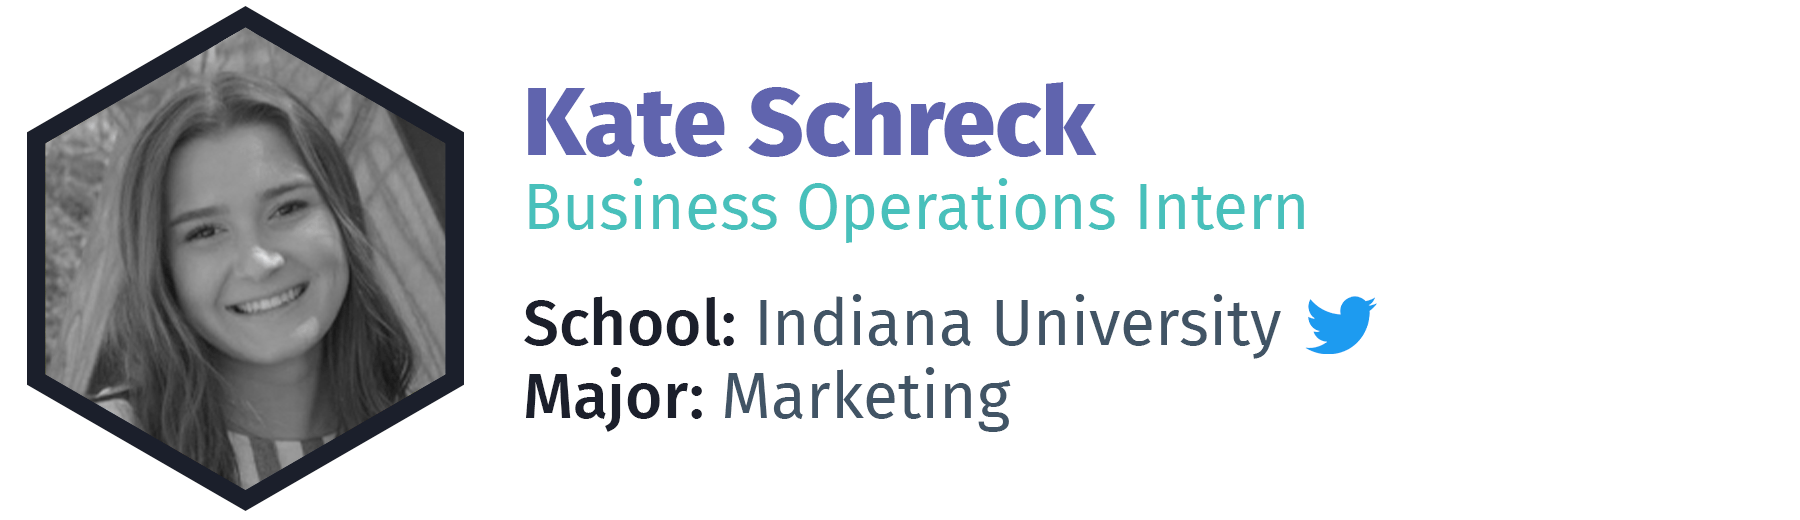 Kate Schreck - Business Operations Intern